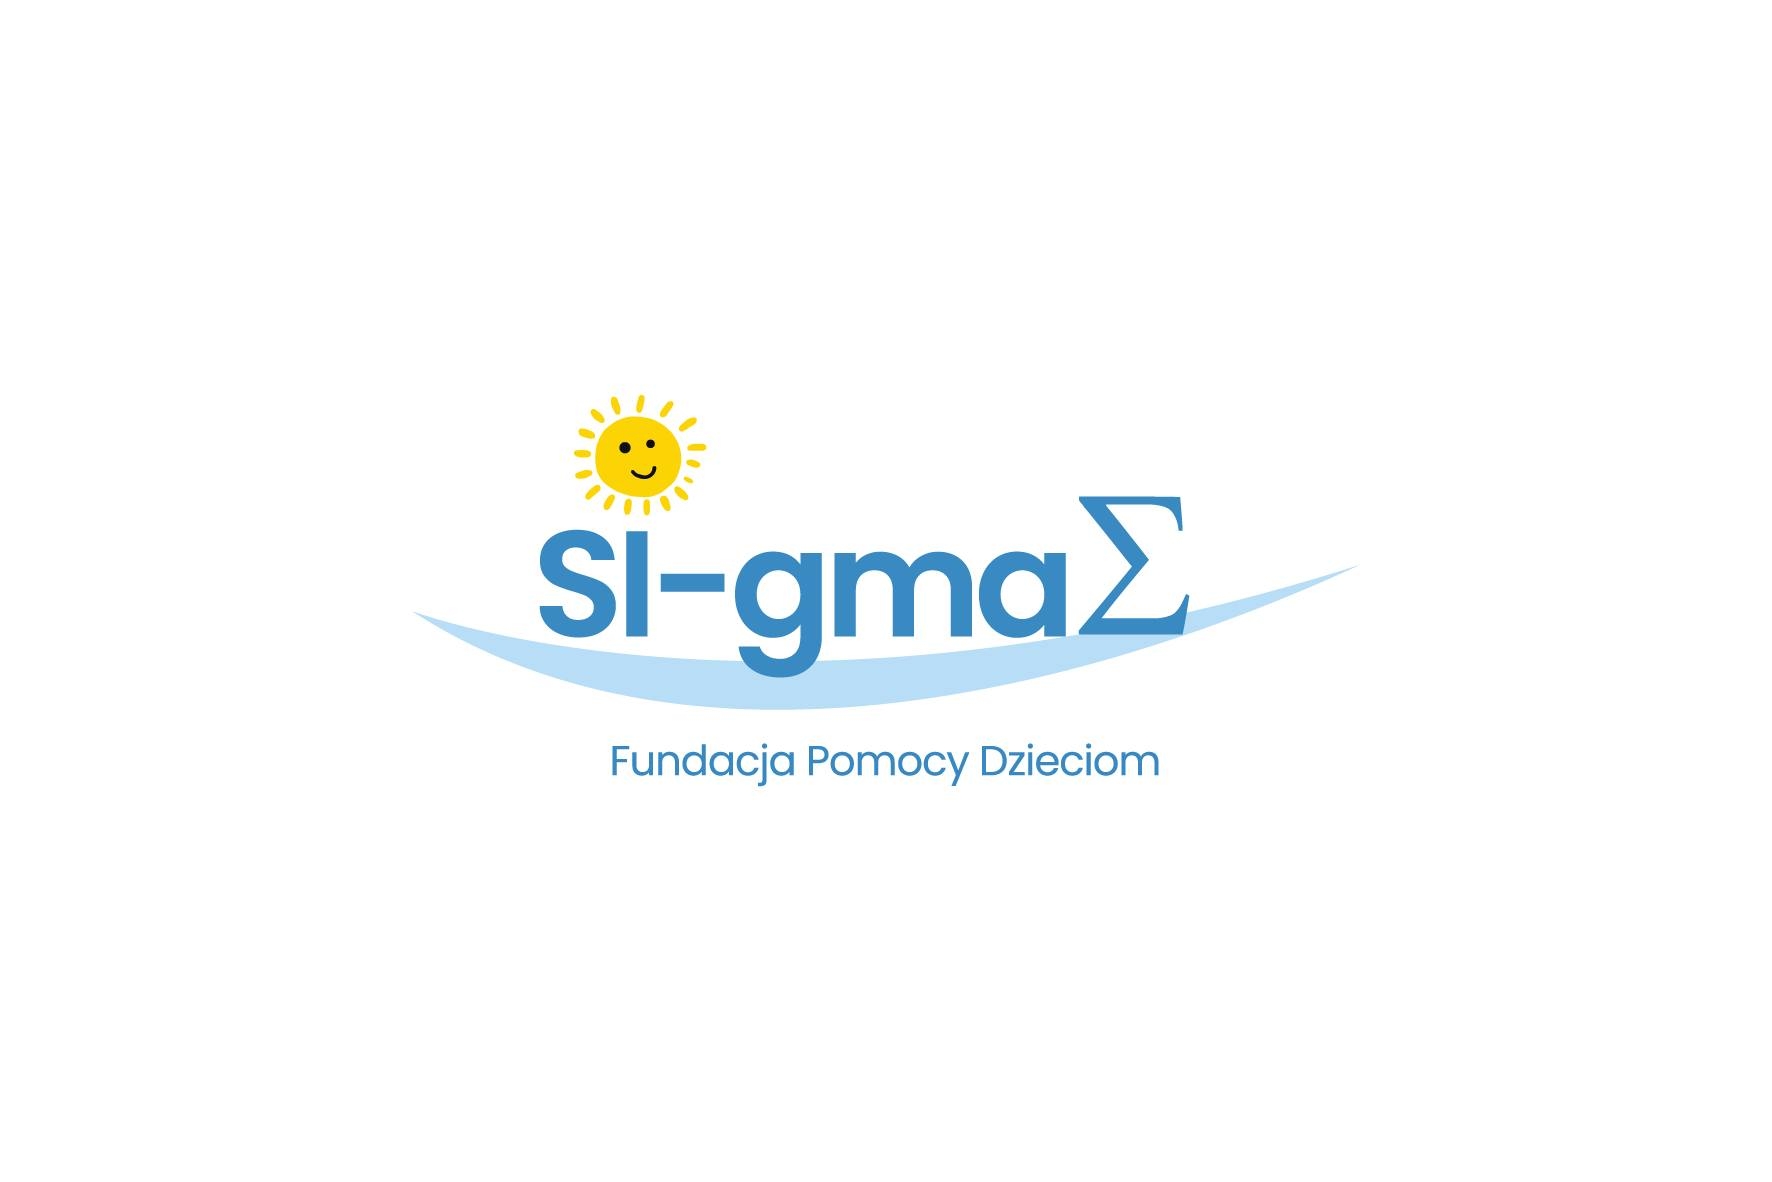 Fundacja SI-gma